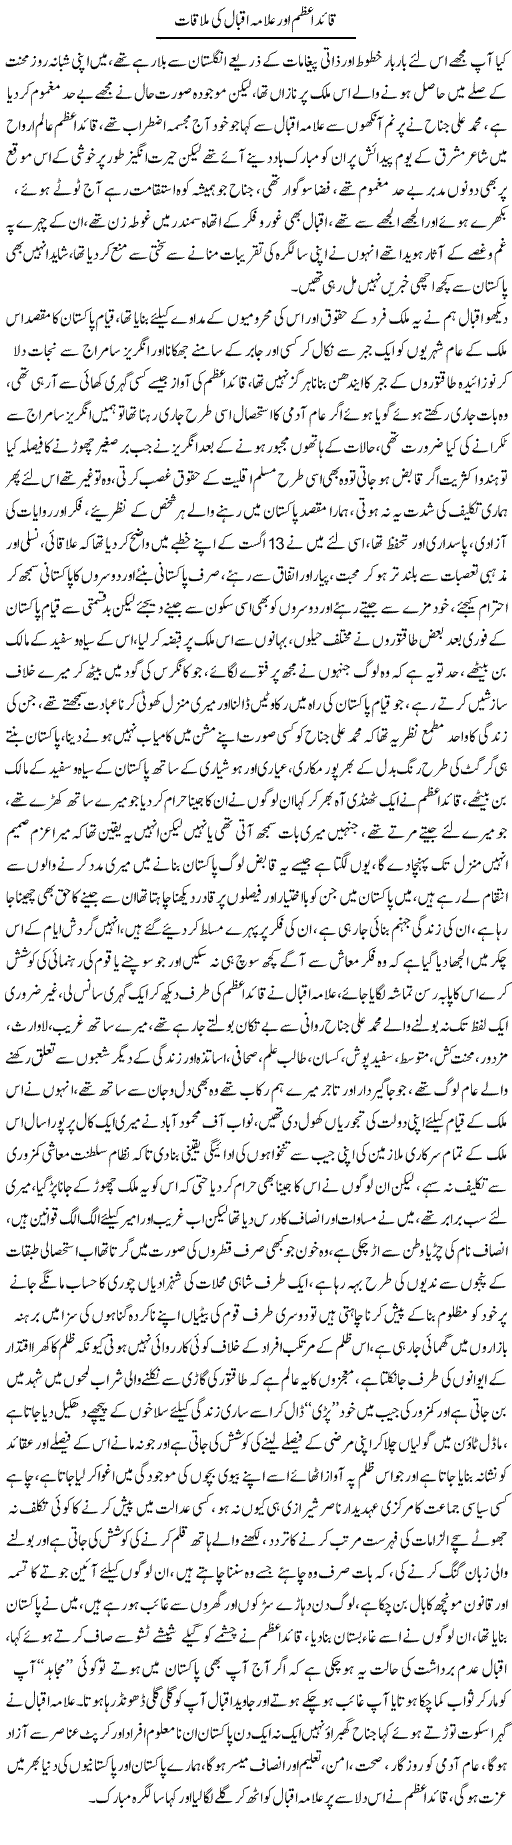 Quaid Azam Aur Allama Iqbal Ki Mulaqaat | Ali Raza Alvi | Daily Urdu Columns